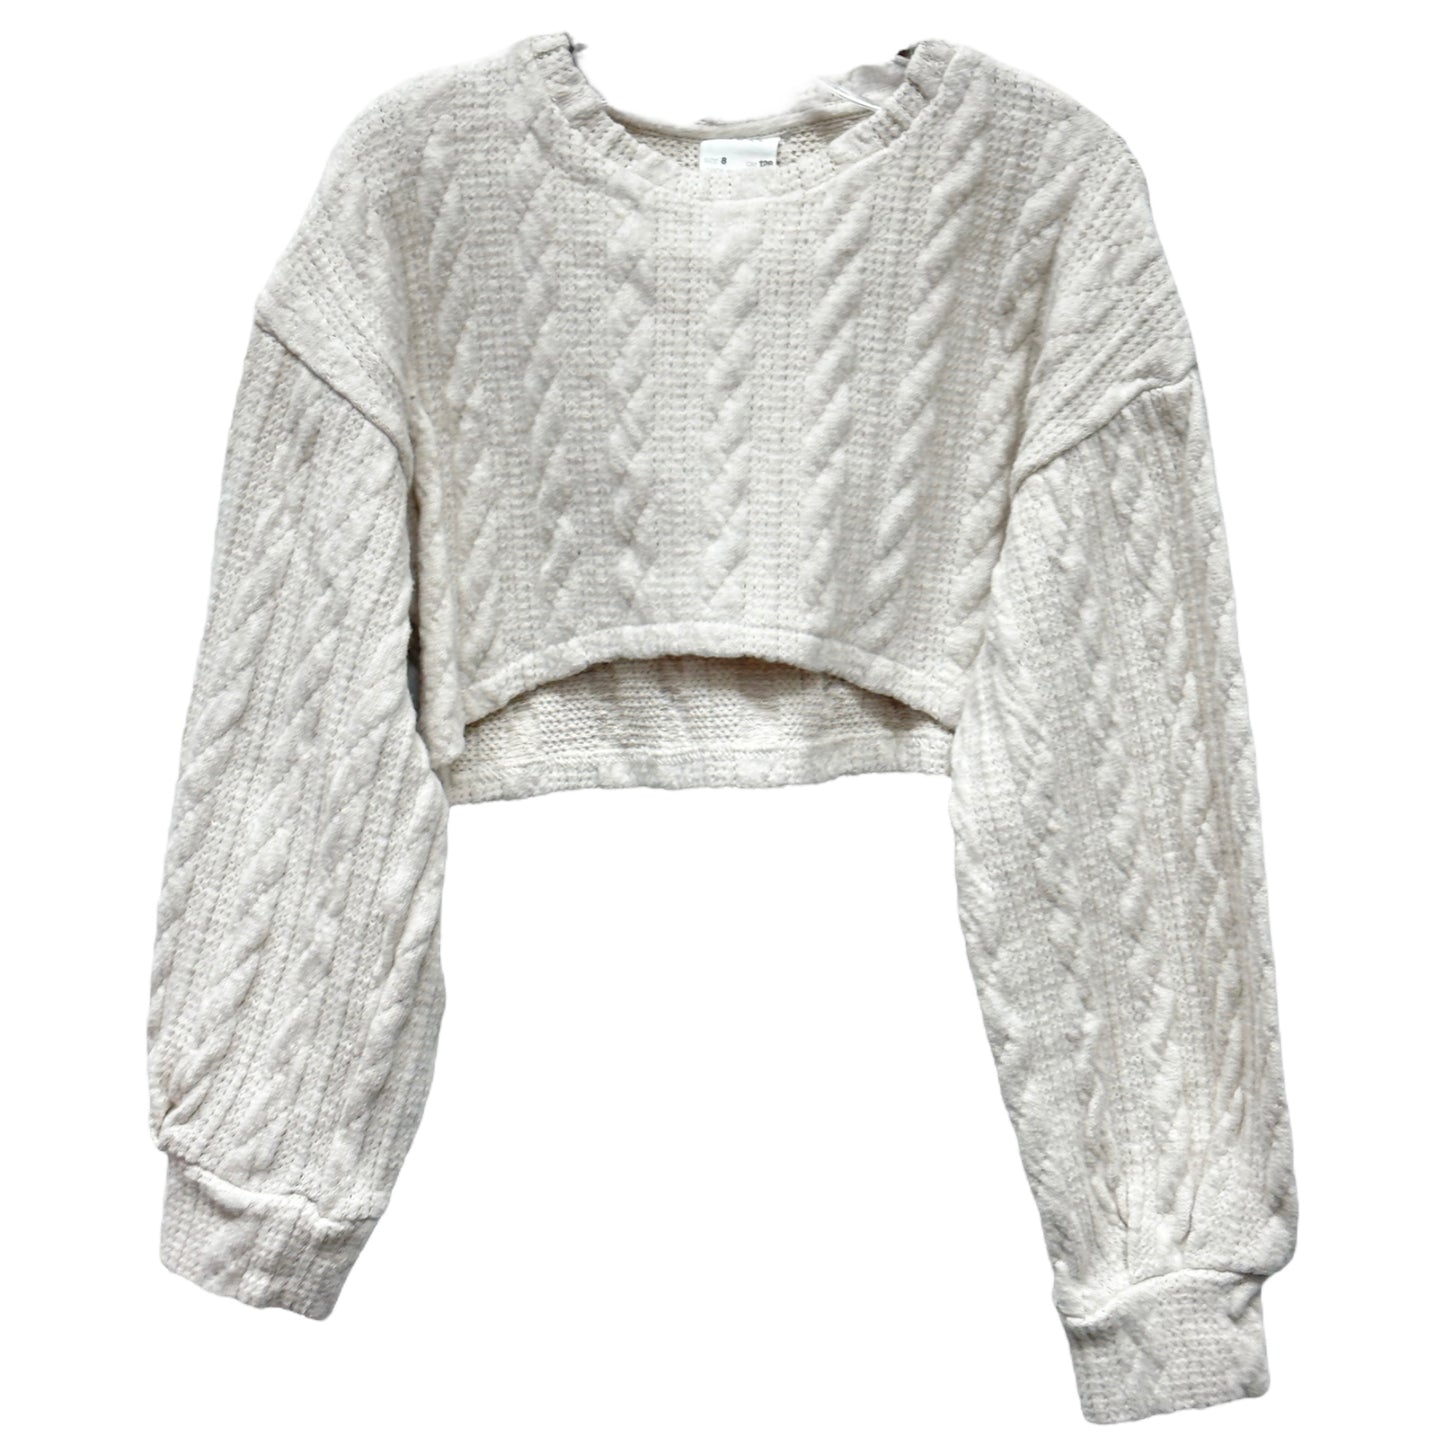 Zara 8 Sweater